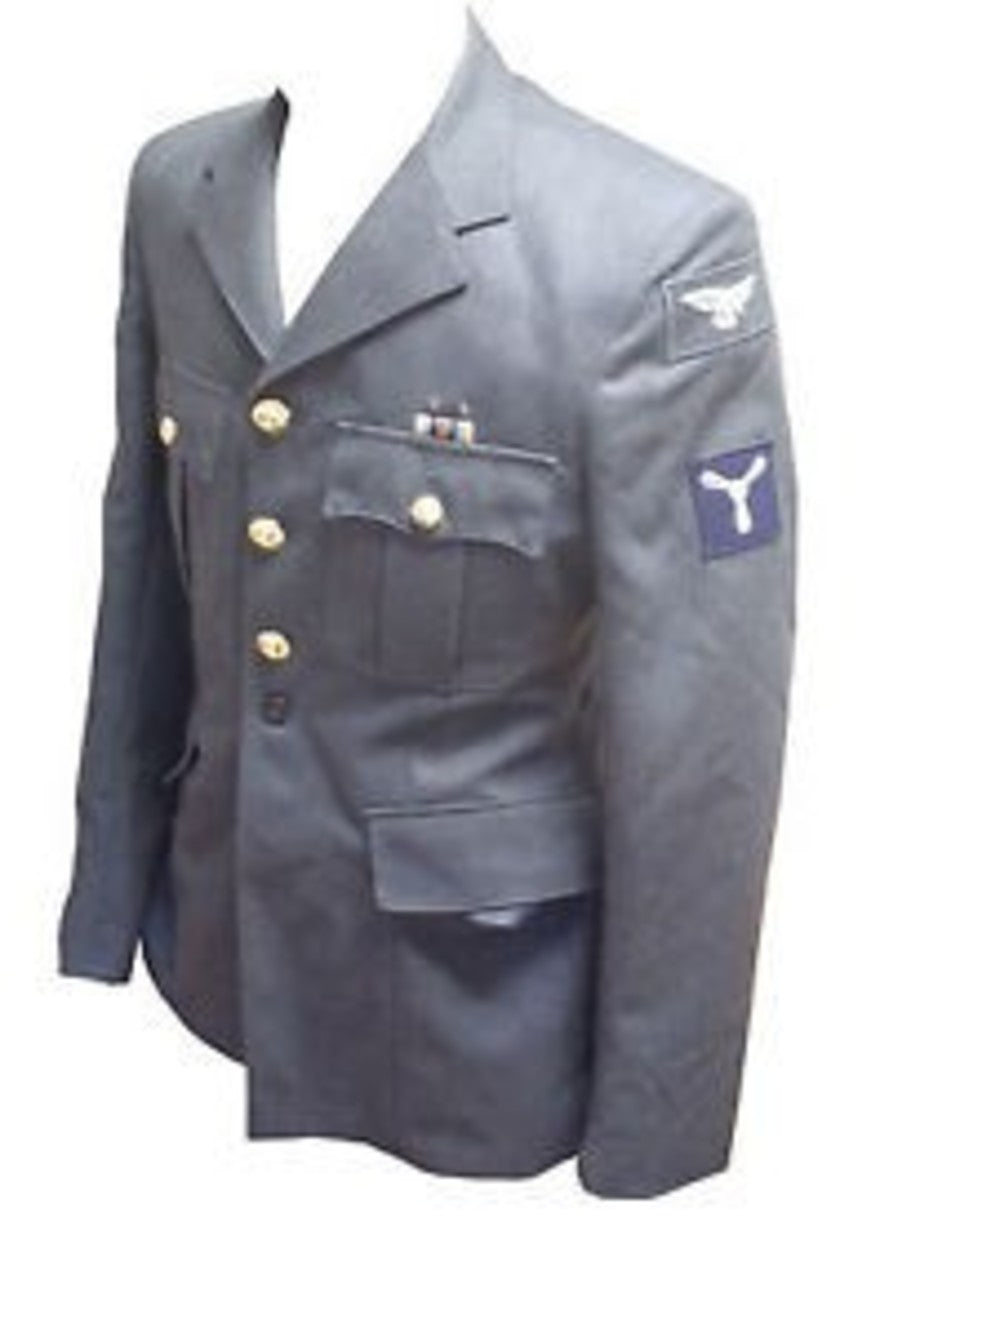 RAF No. 1 Dress jacket